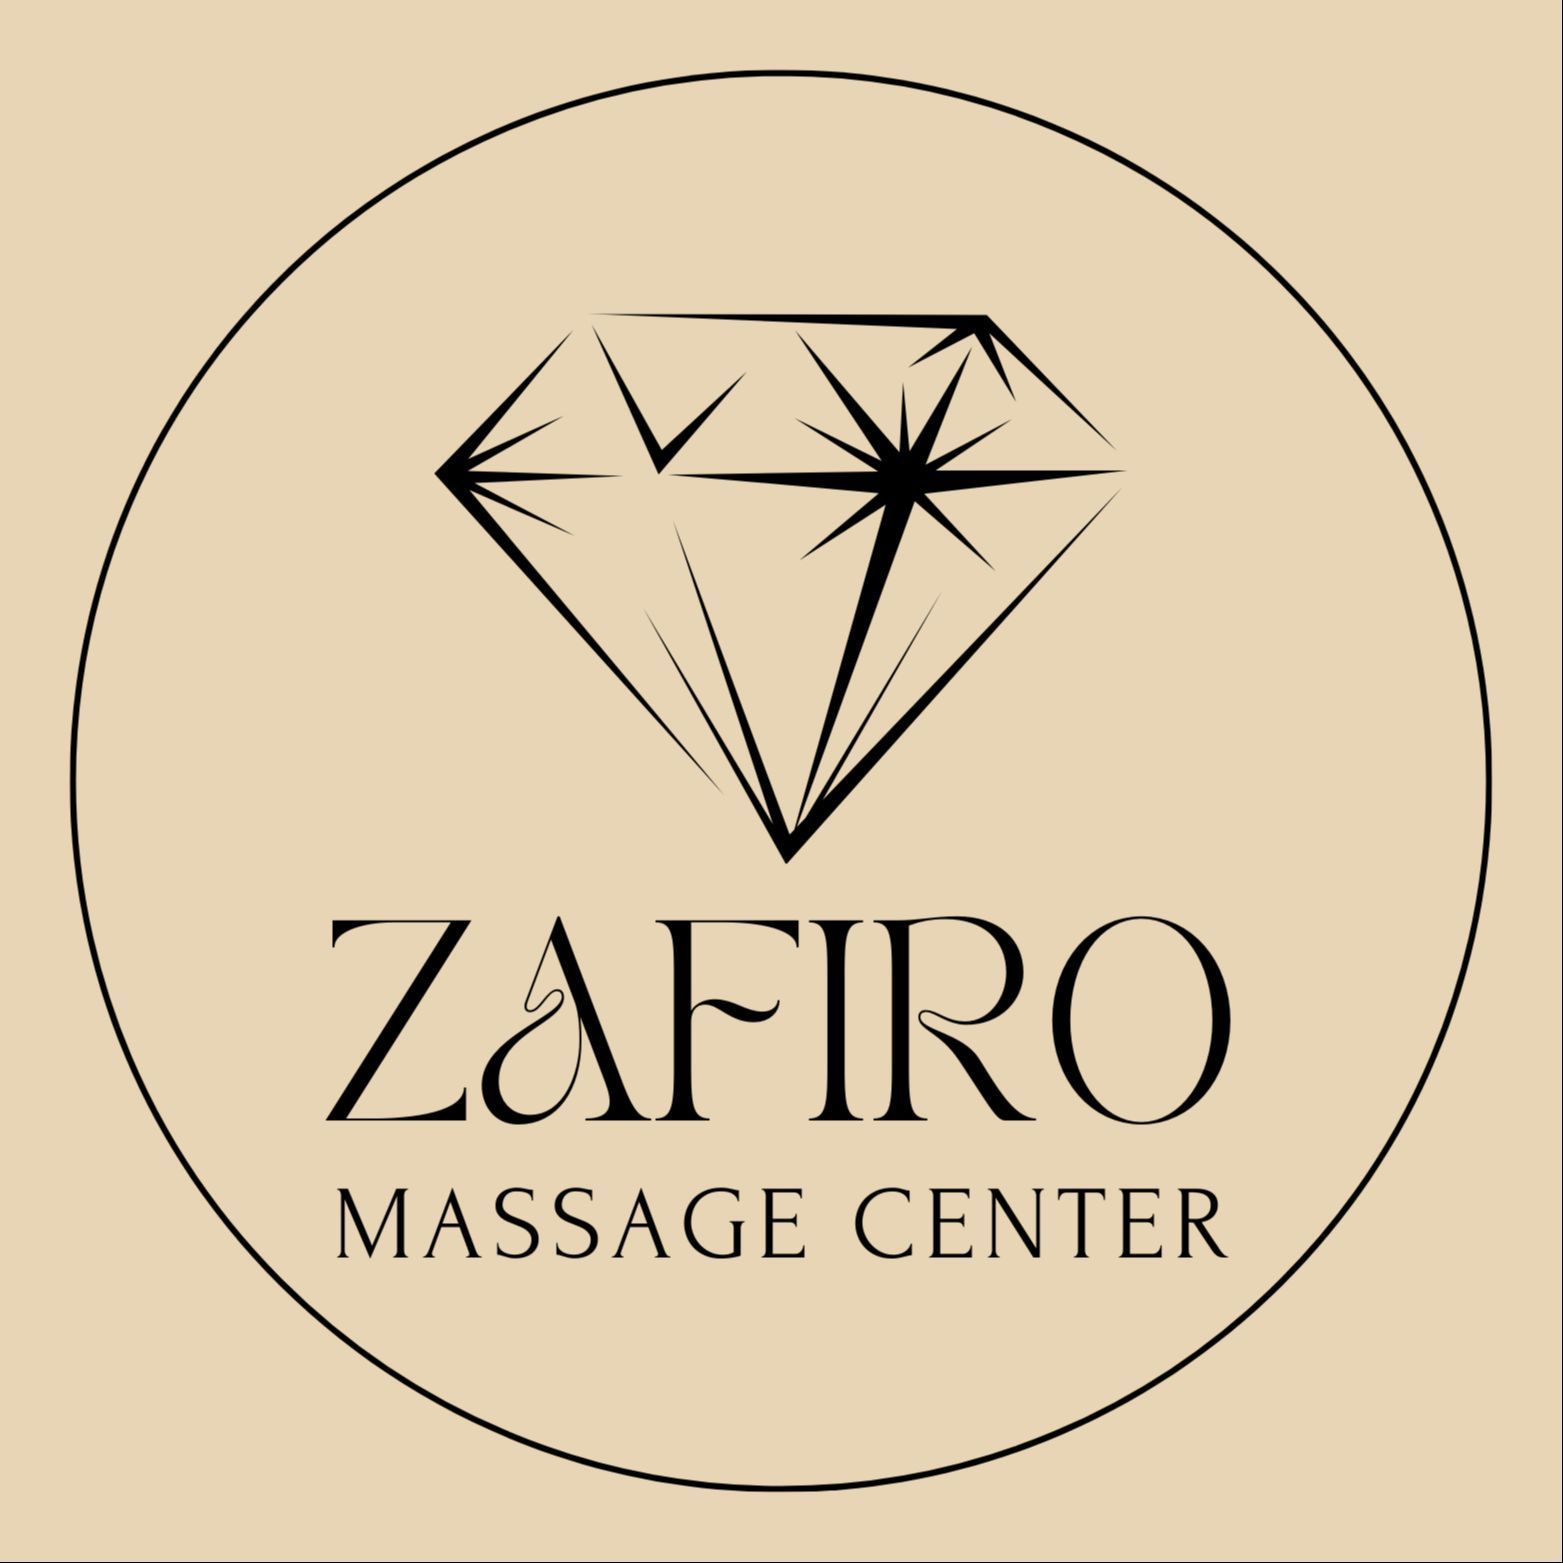 Zafiro Massage Center, 2700 Biscayne Blvd, Miami, 33137